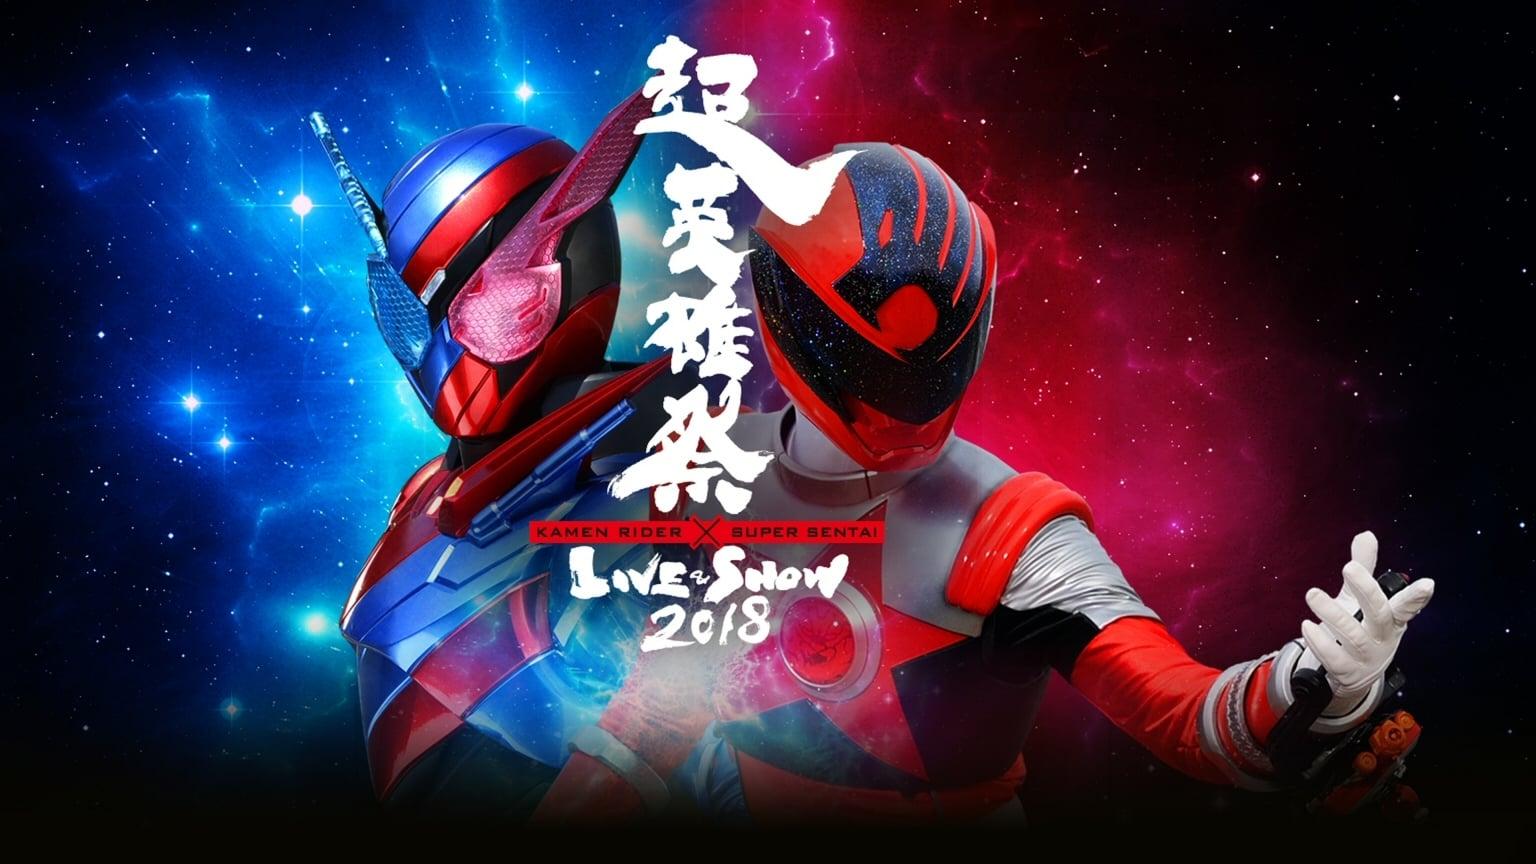 Super Hero Festival: Kamen Rider x Super Sentai Live & Show 2018 backdrop